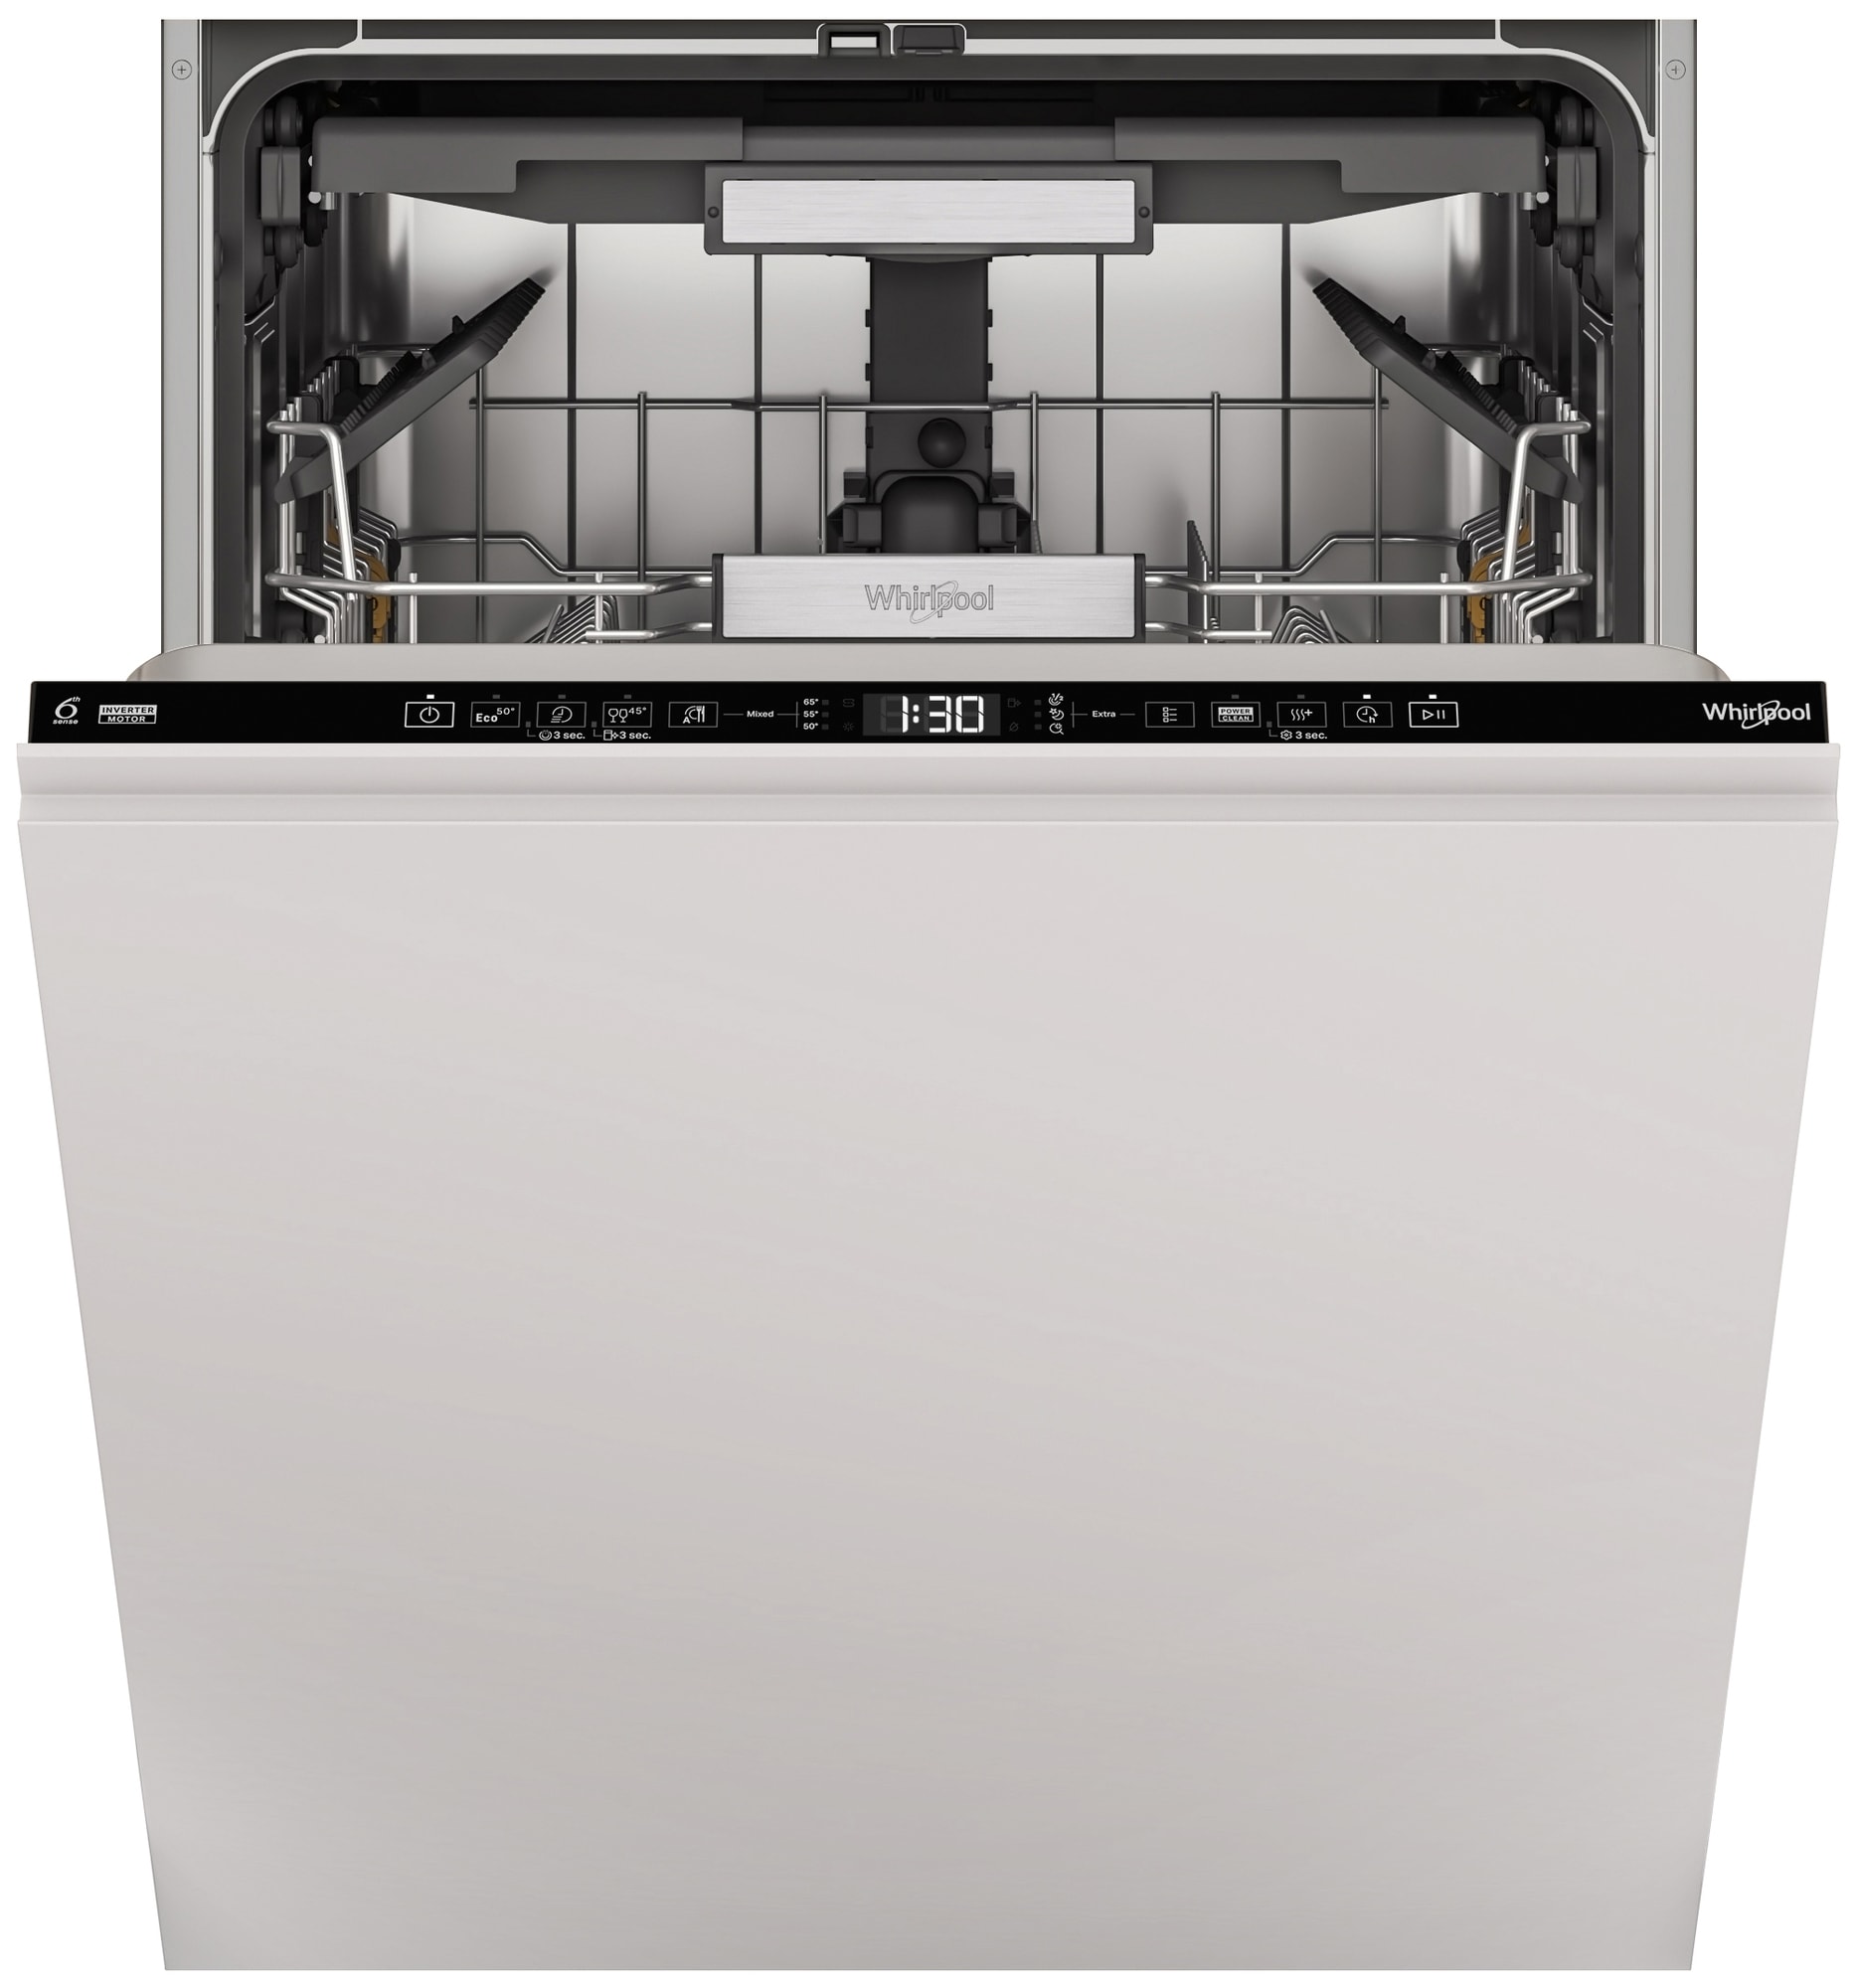 Whirlpool opvaskemaskine W7I HT40 TS, fuldt integreret thumbnail